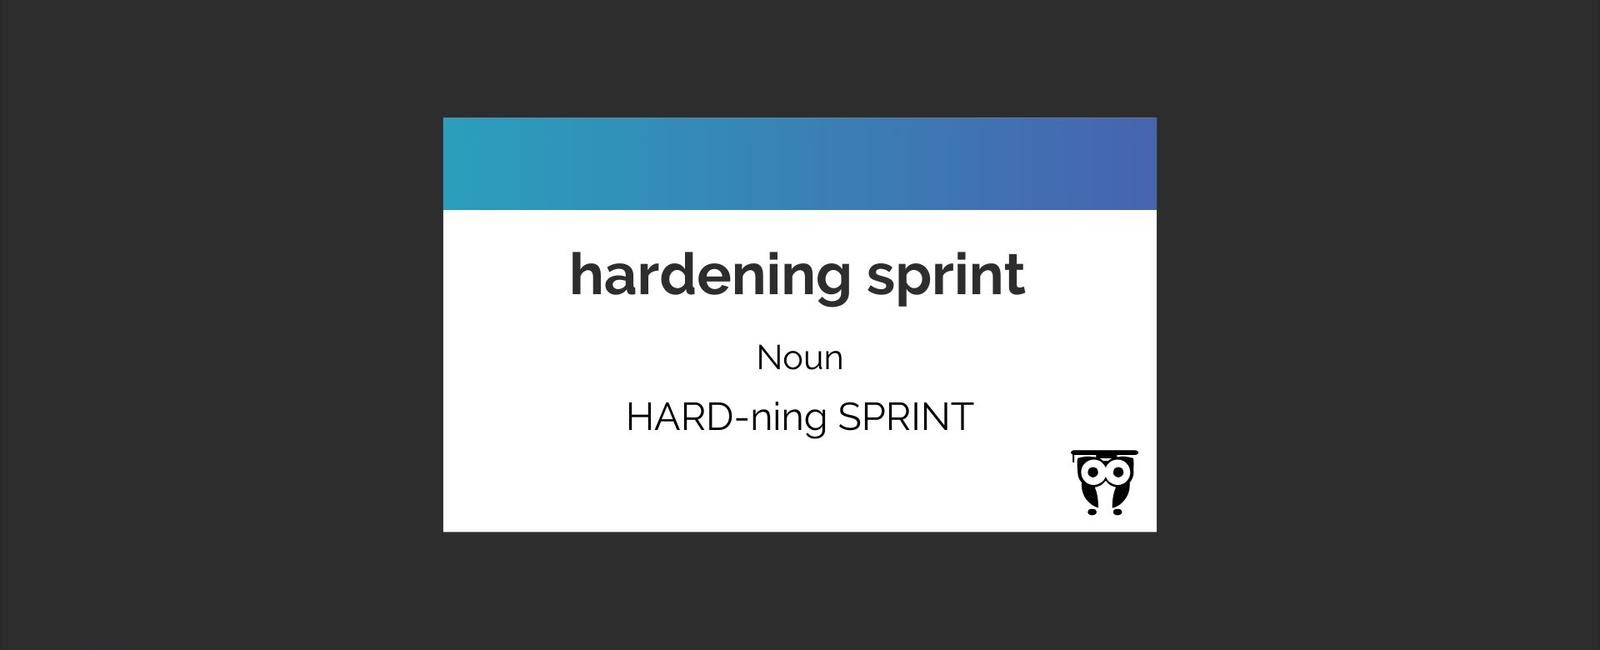 Hardening Sprint